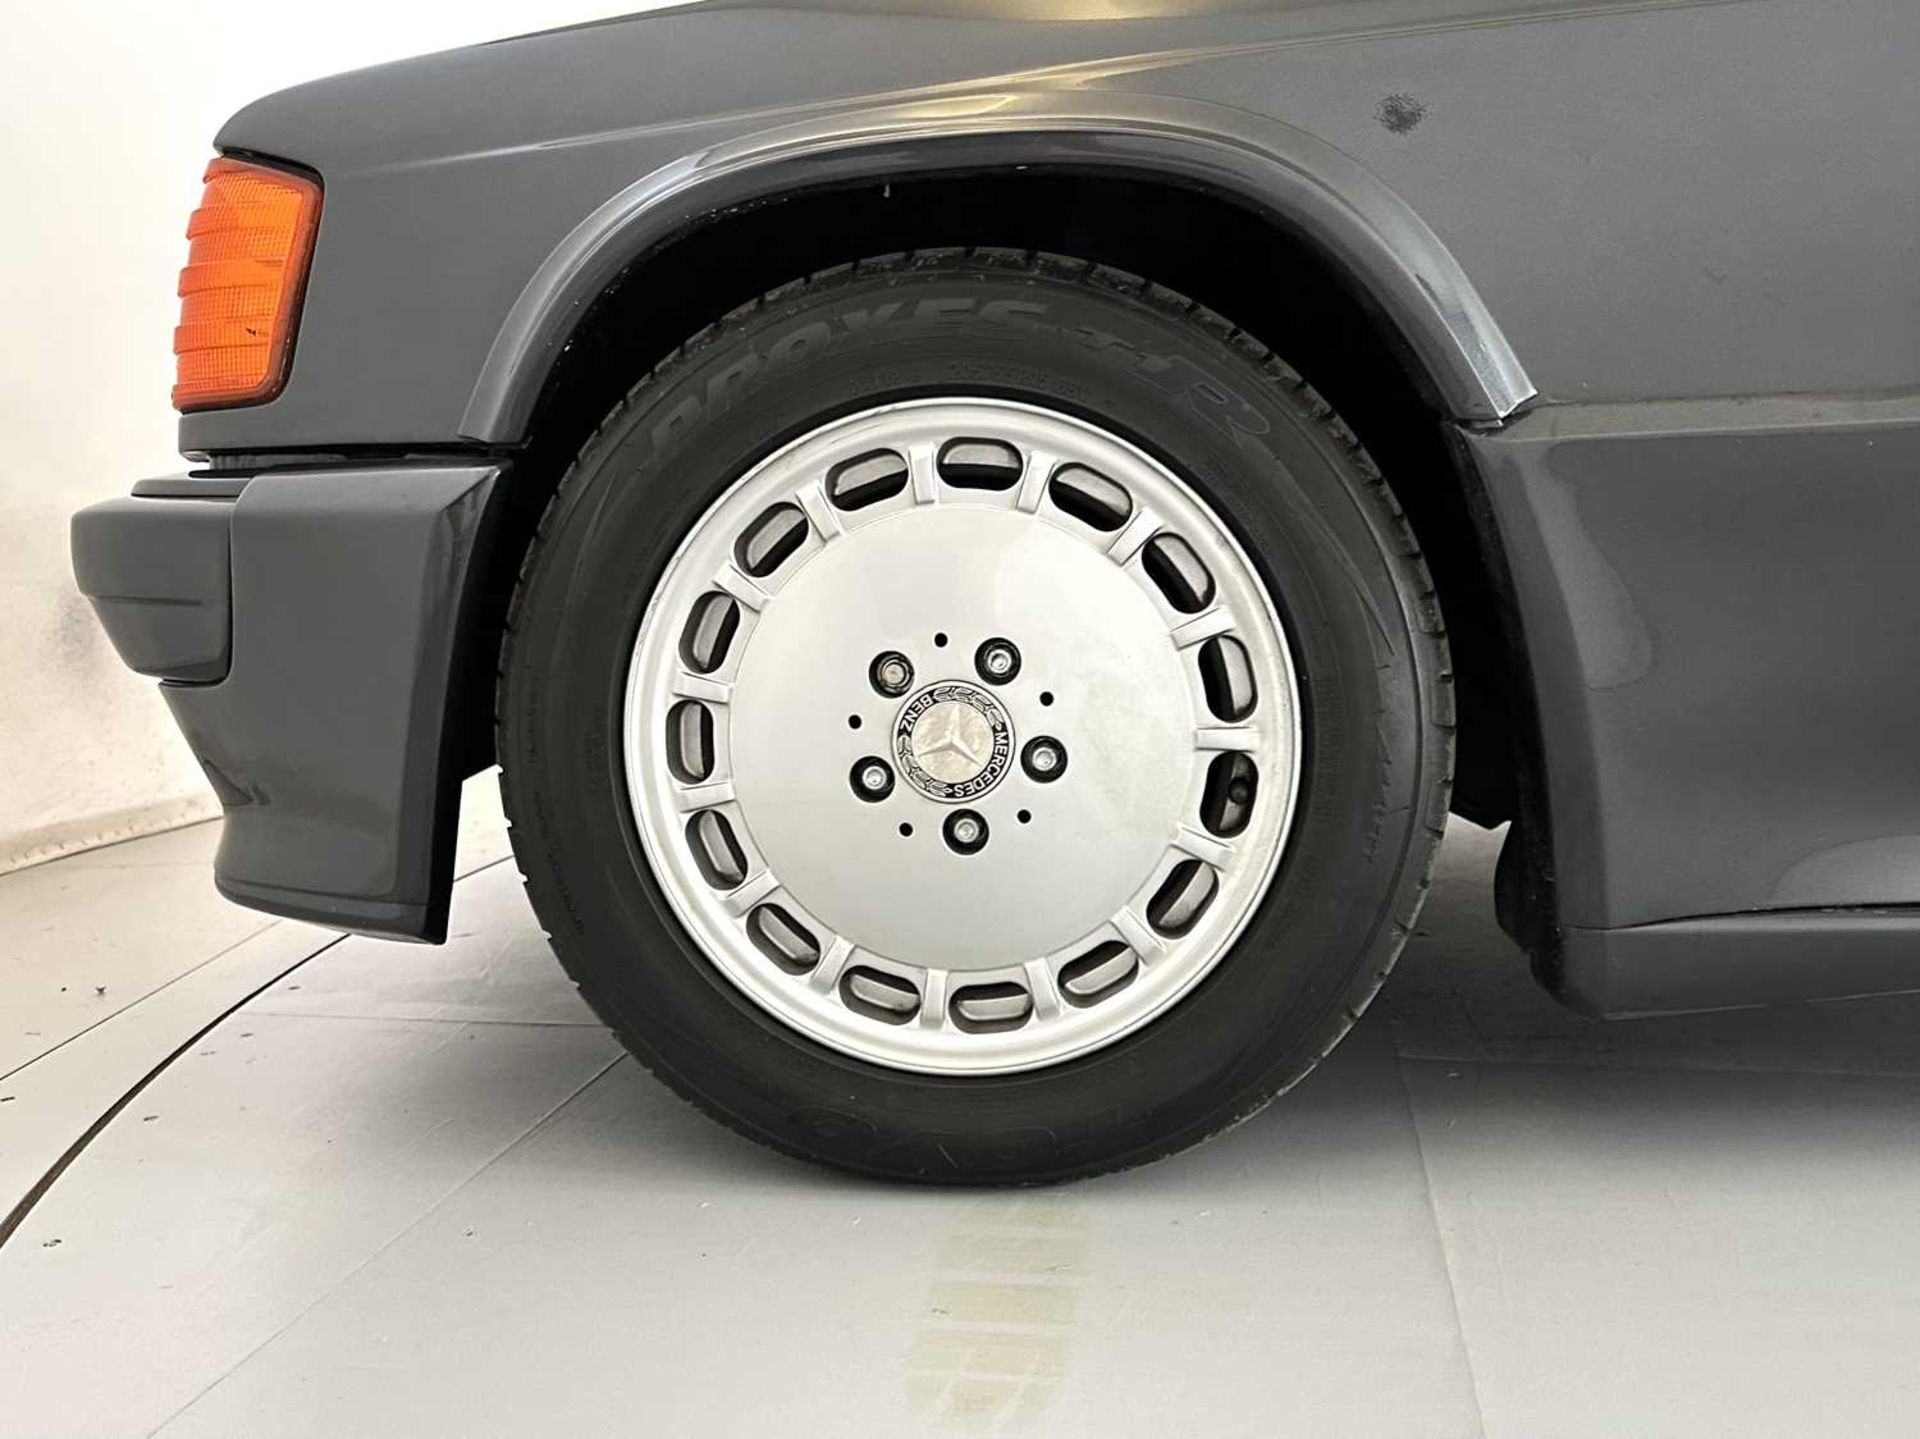 1985 Mercedes-Benz 190E 2.3-16 Cosworth - Image 13 of 35